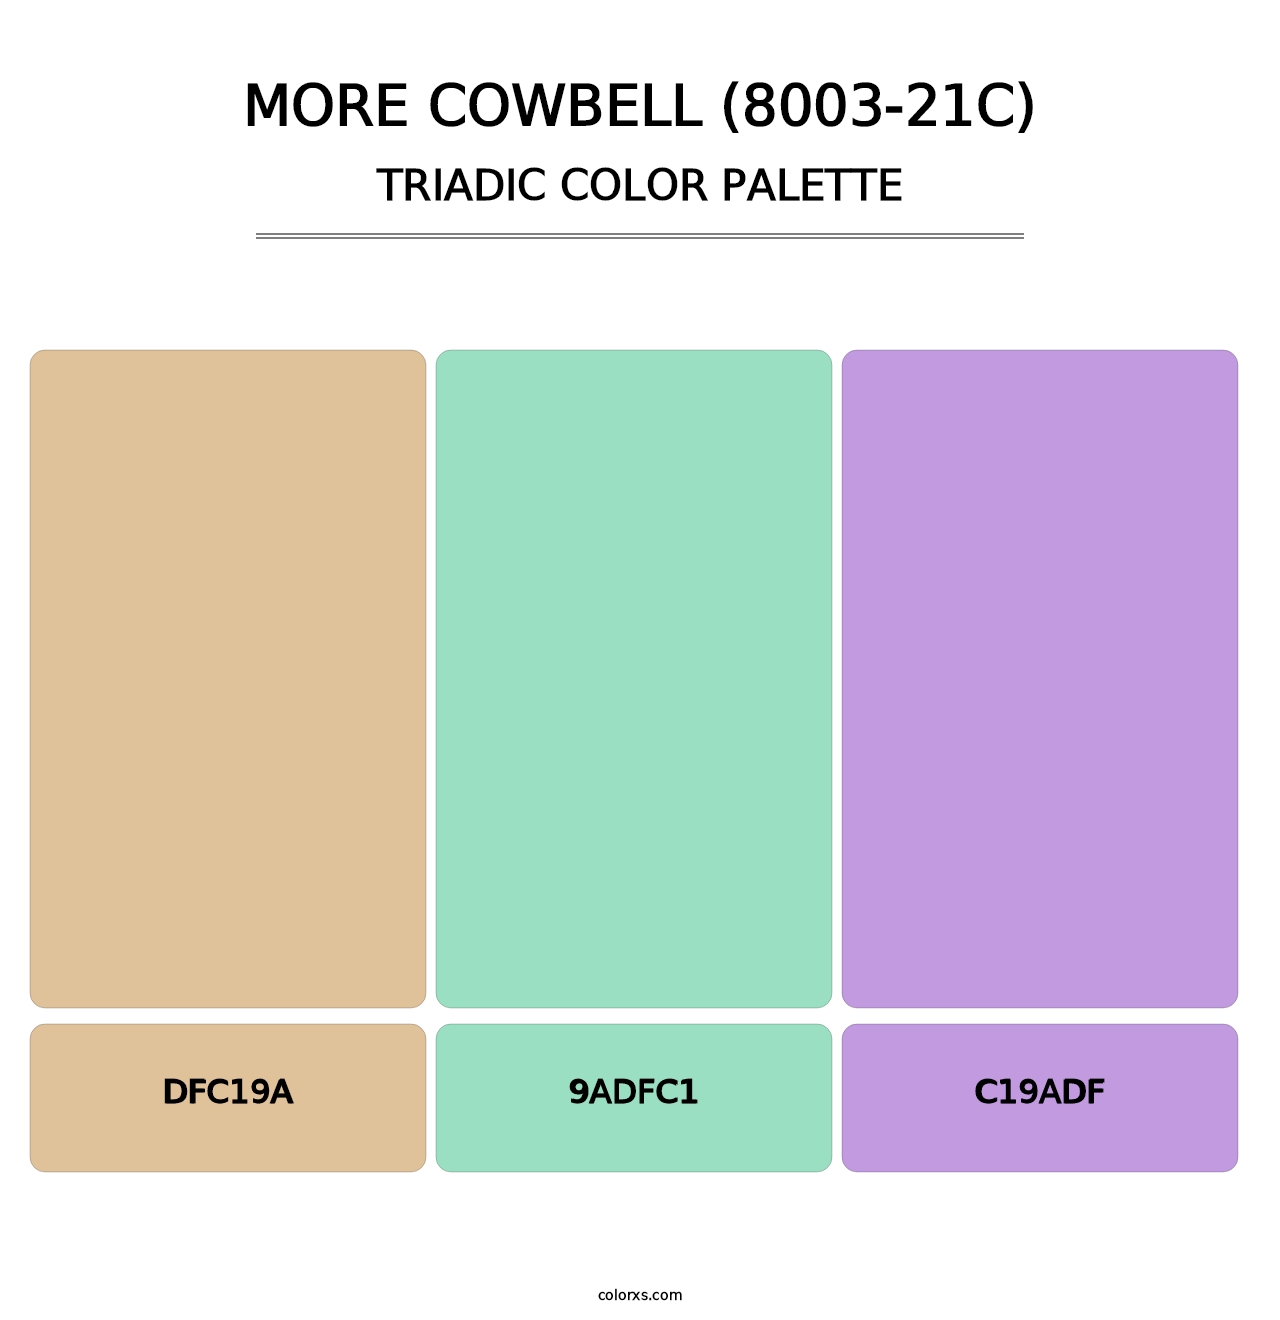 More Cowbell (8003-21C) - Triadic Color Palette